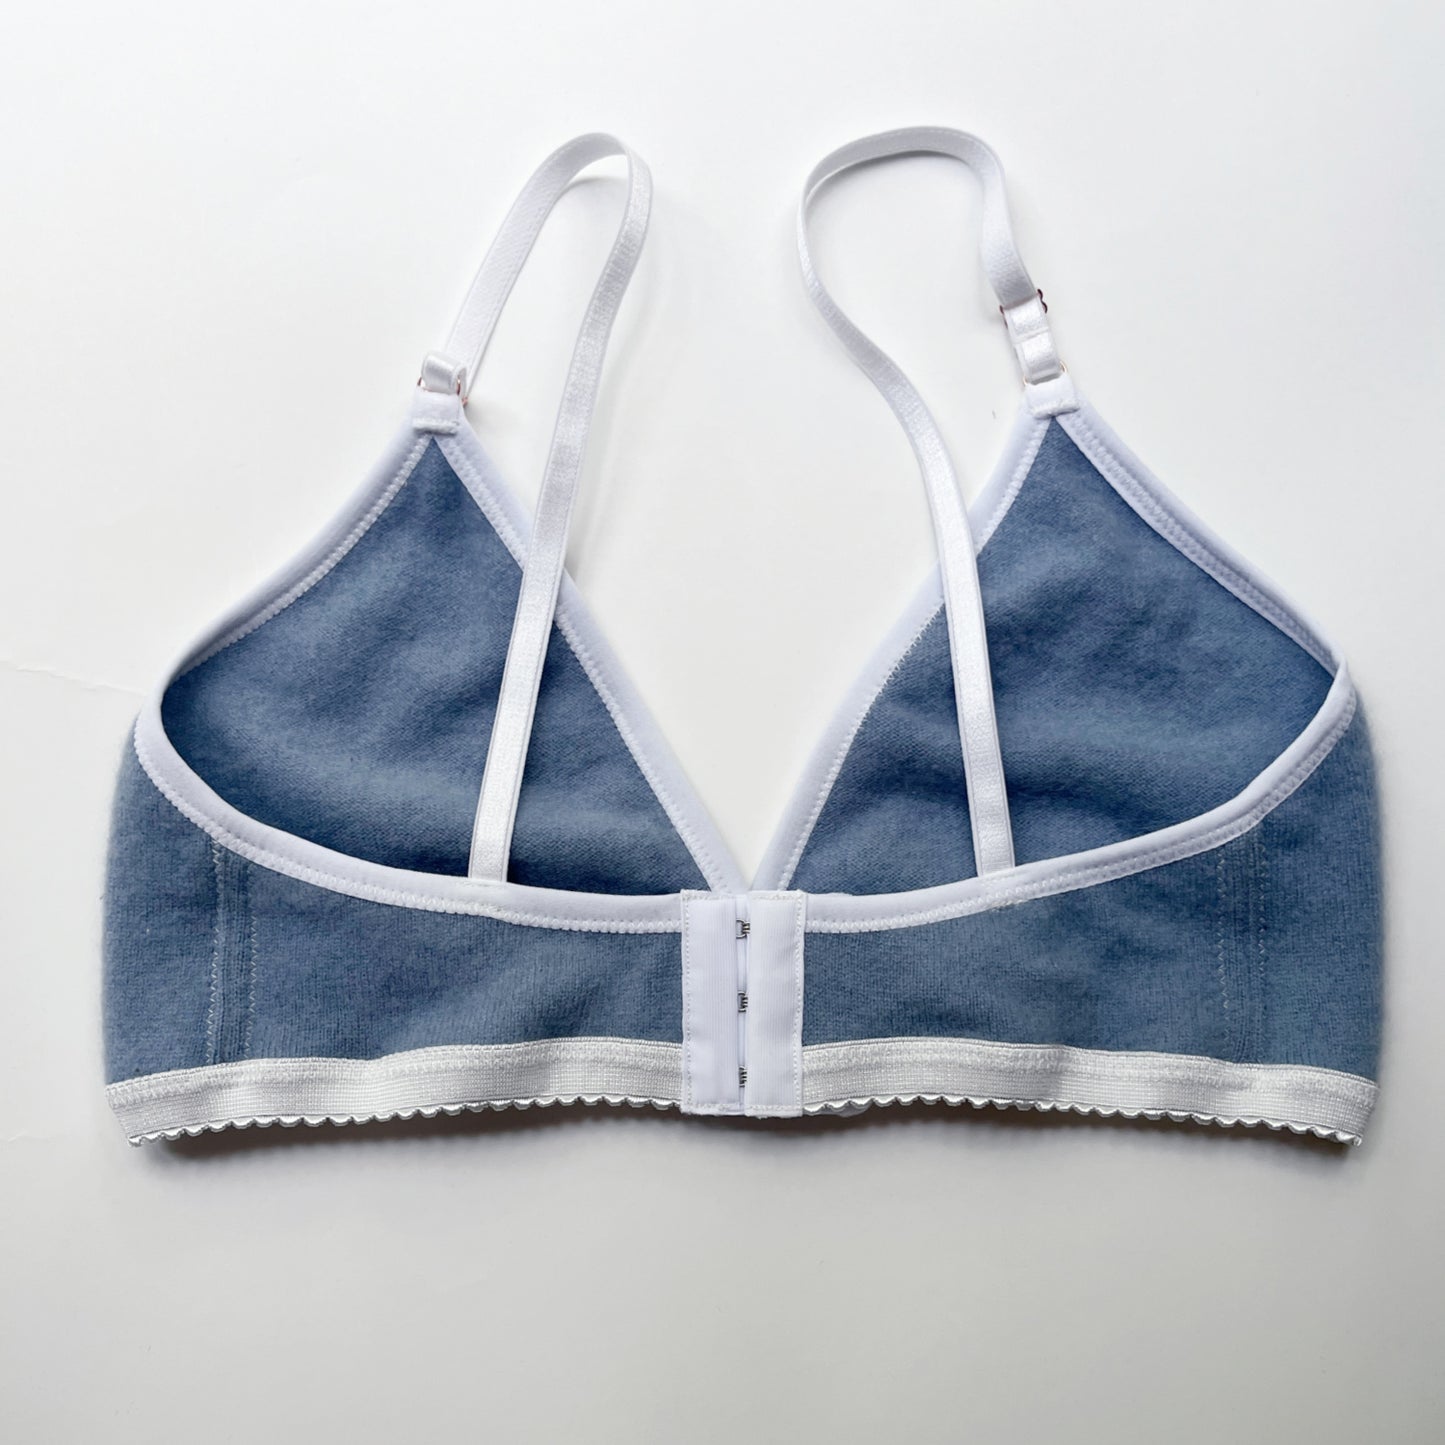 SHop Blue Cashmere bra size Medium/Large | Ready to ship cashmere lingerie